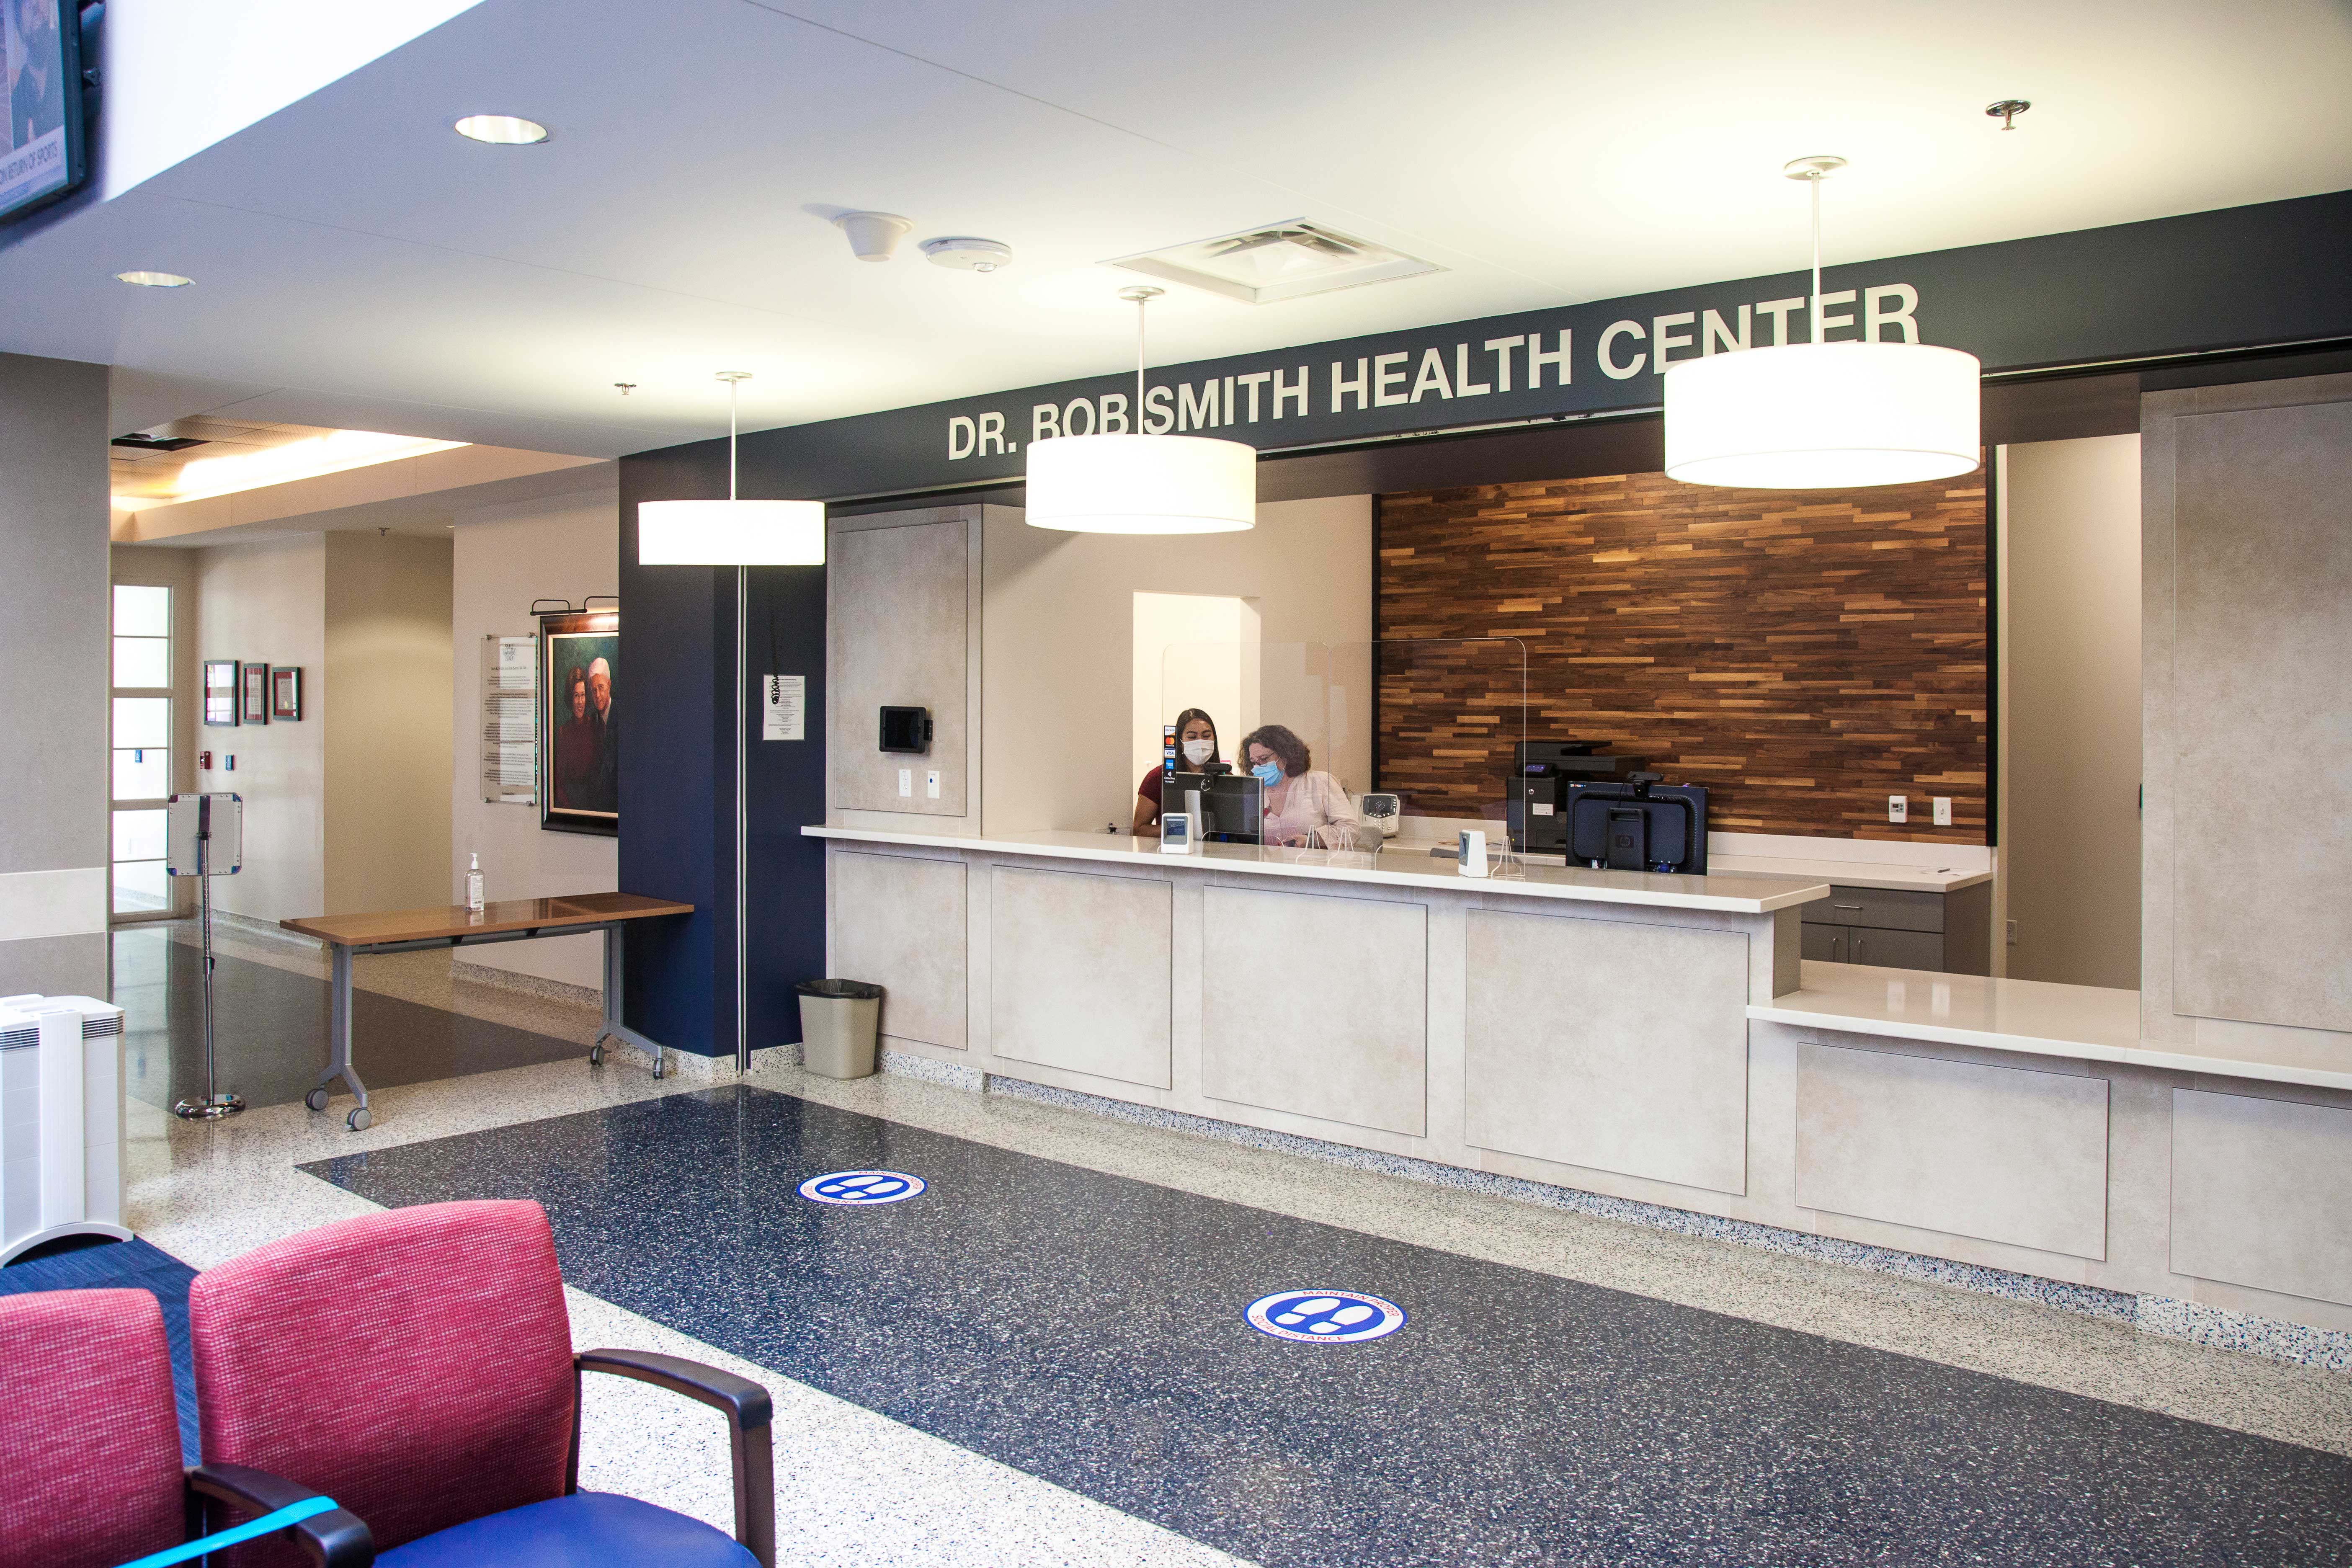 Health Center services